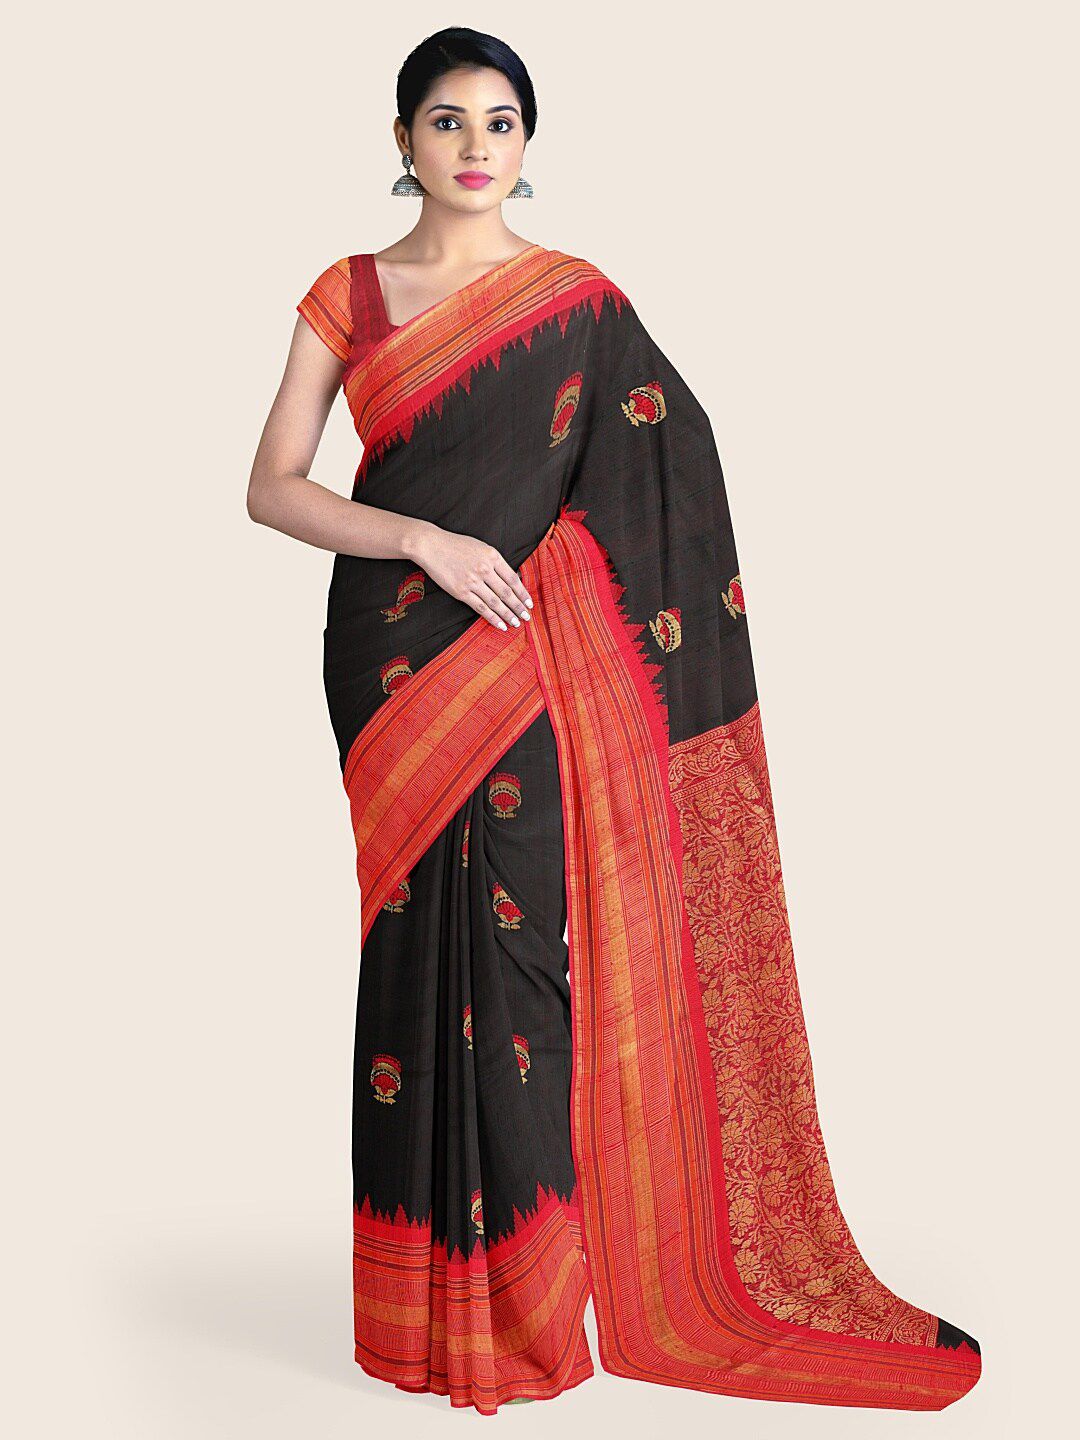 Pothys Black & Red Floral Jute Silk Saree Price in India